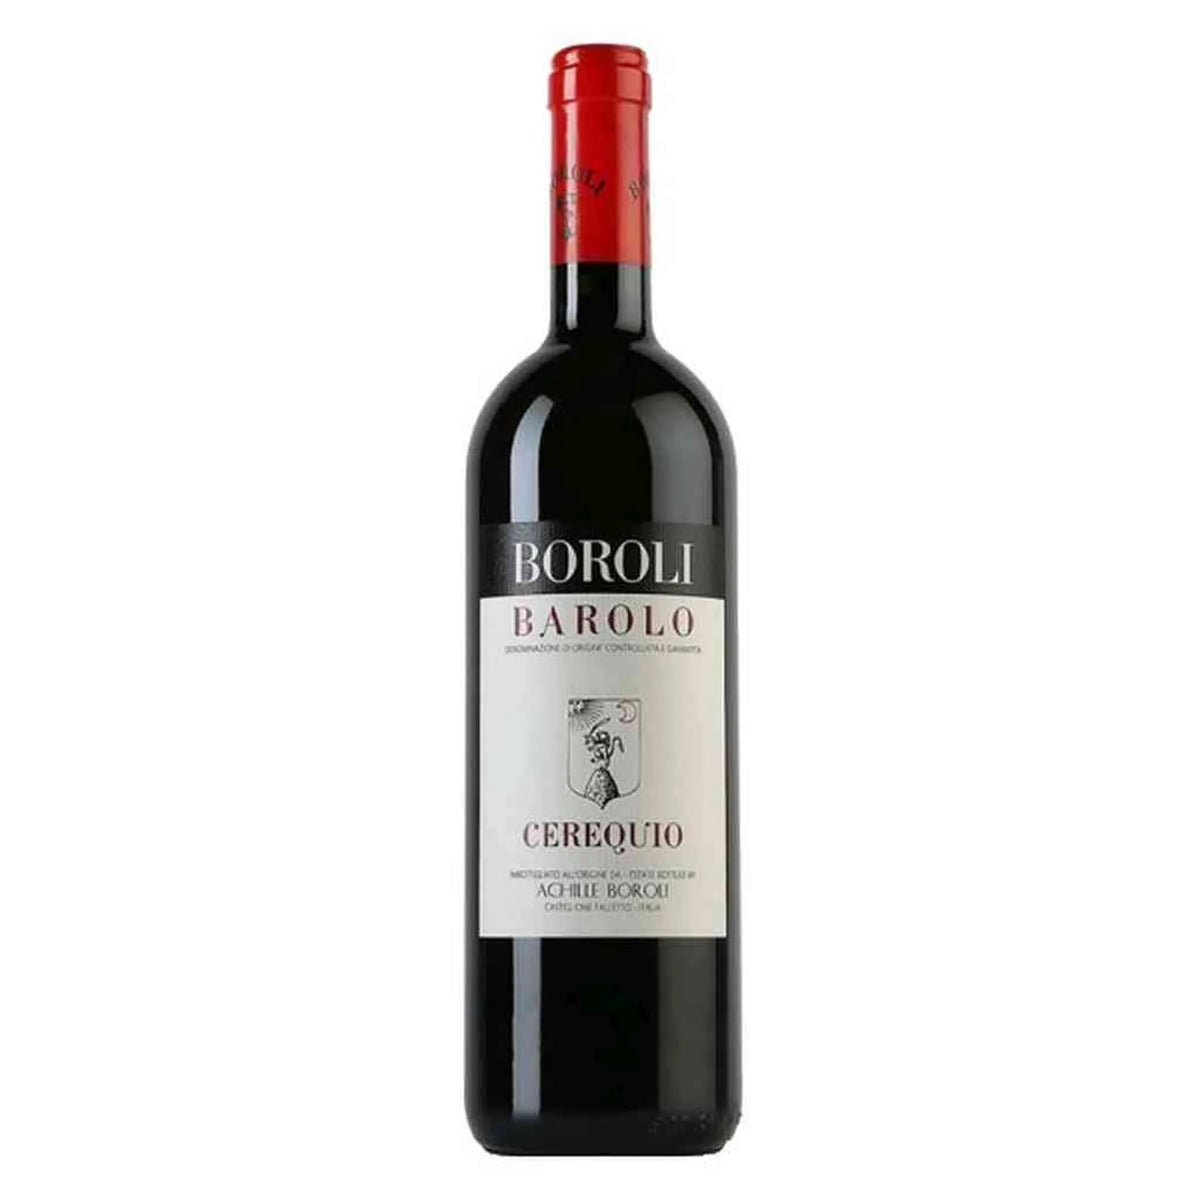 Boroli-Rotwein-Nebbiolo-2012 Barolo Cerequio-WINECOM